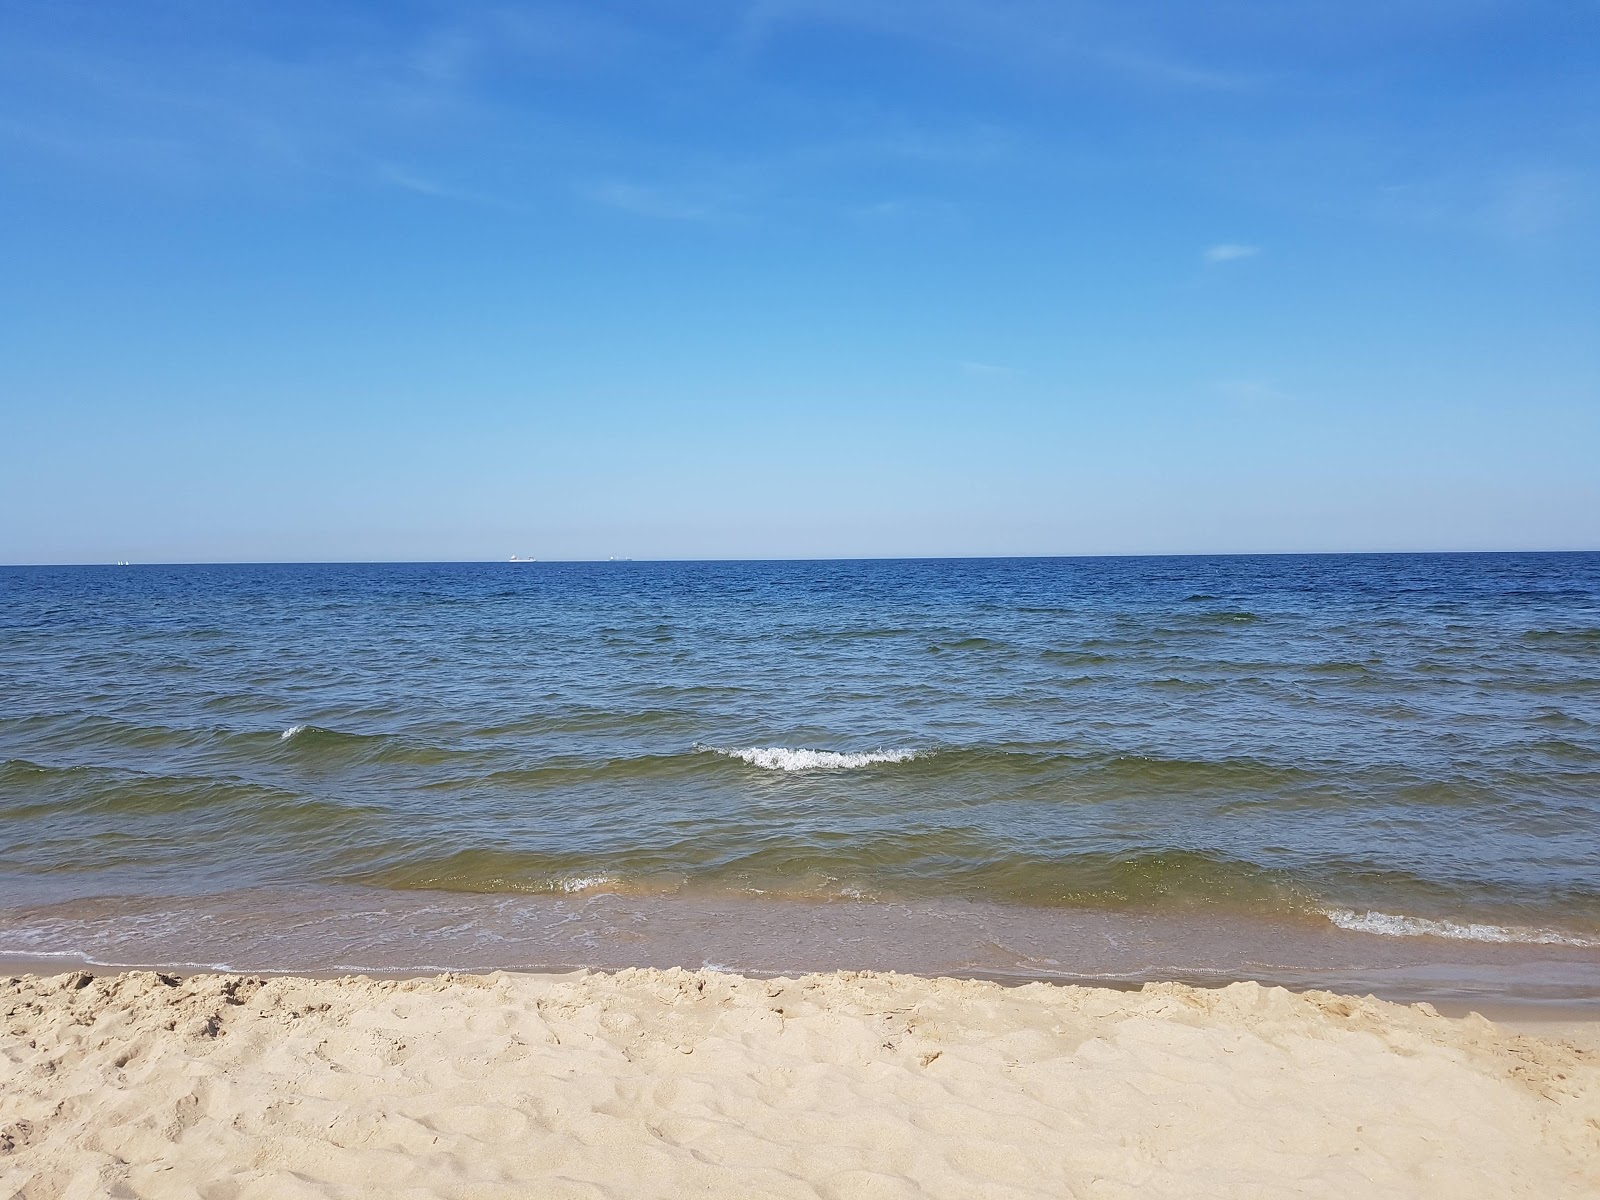 Foto di Gdansk beach ent 16 ubicato in zona naturale